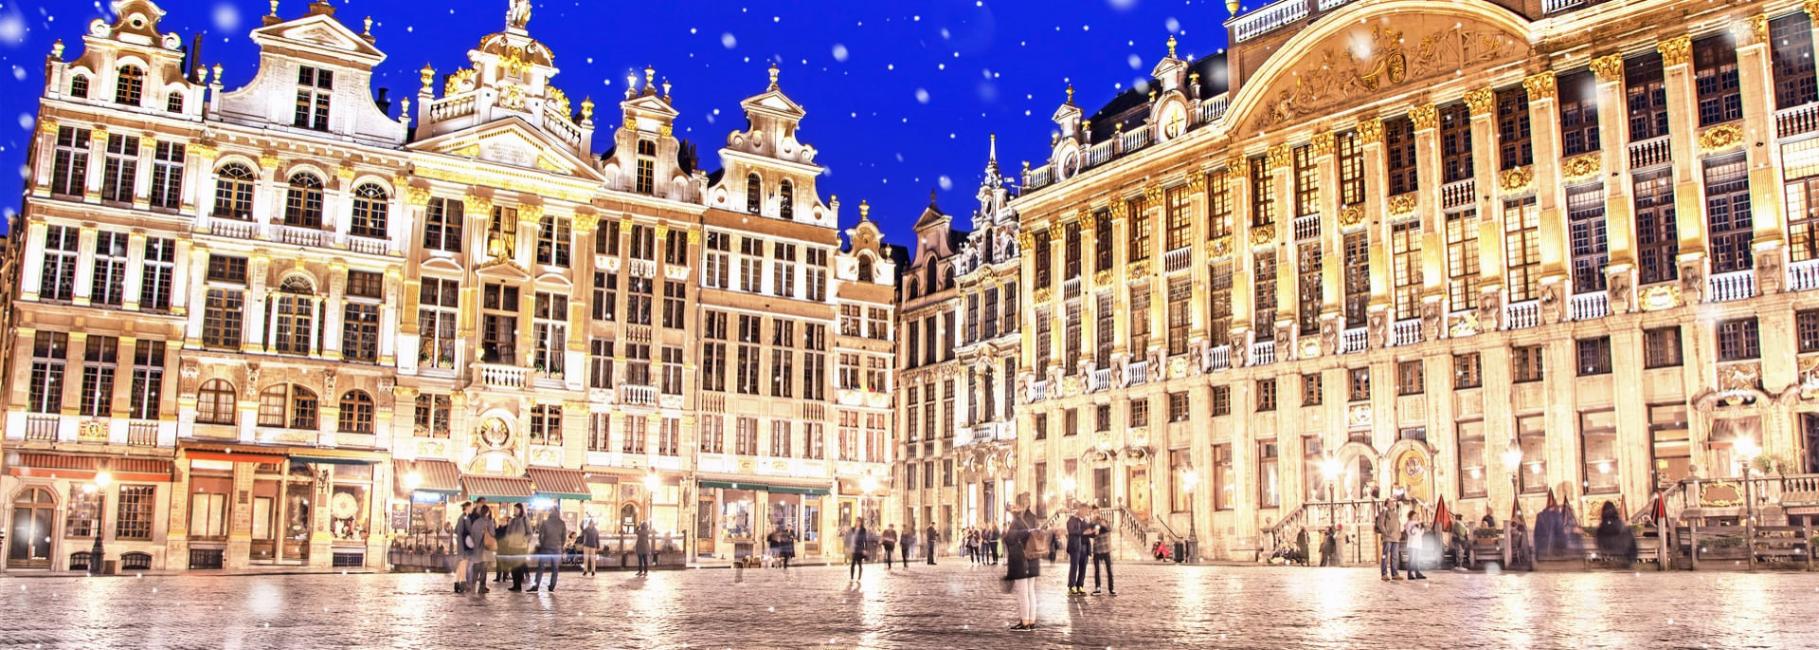 Brussels ChristmasMarkets trip header est